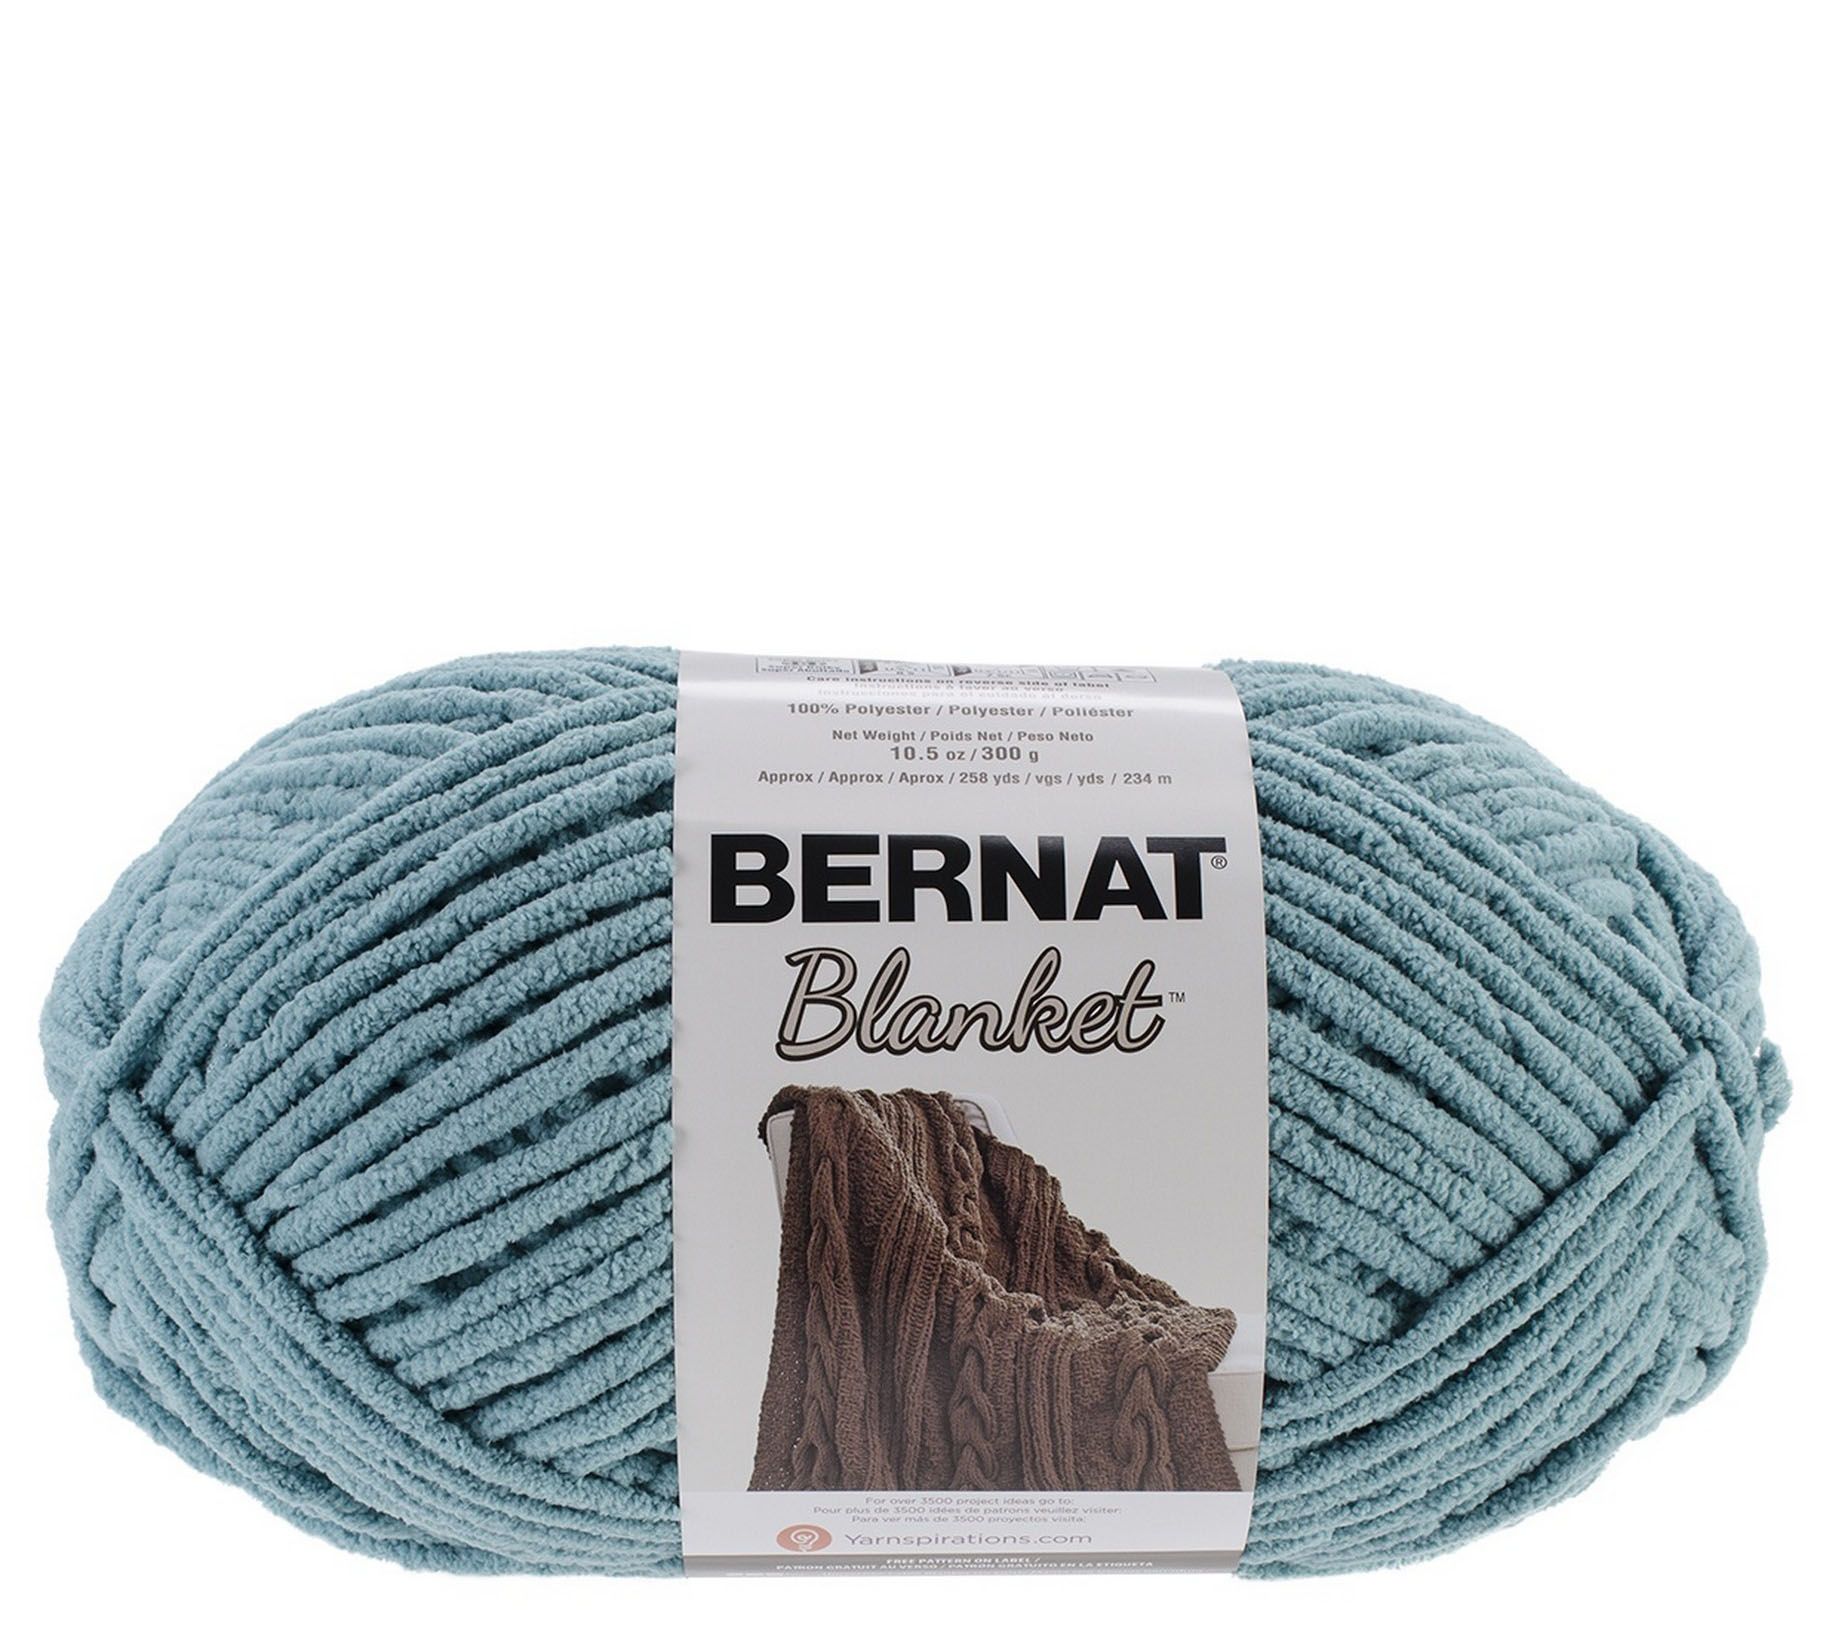 Bernat Blanket Multipack of 4 Teal Big Ball Yarn 